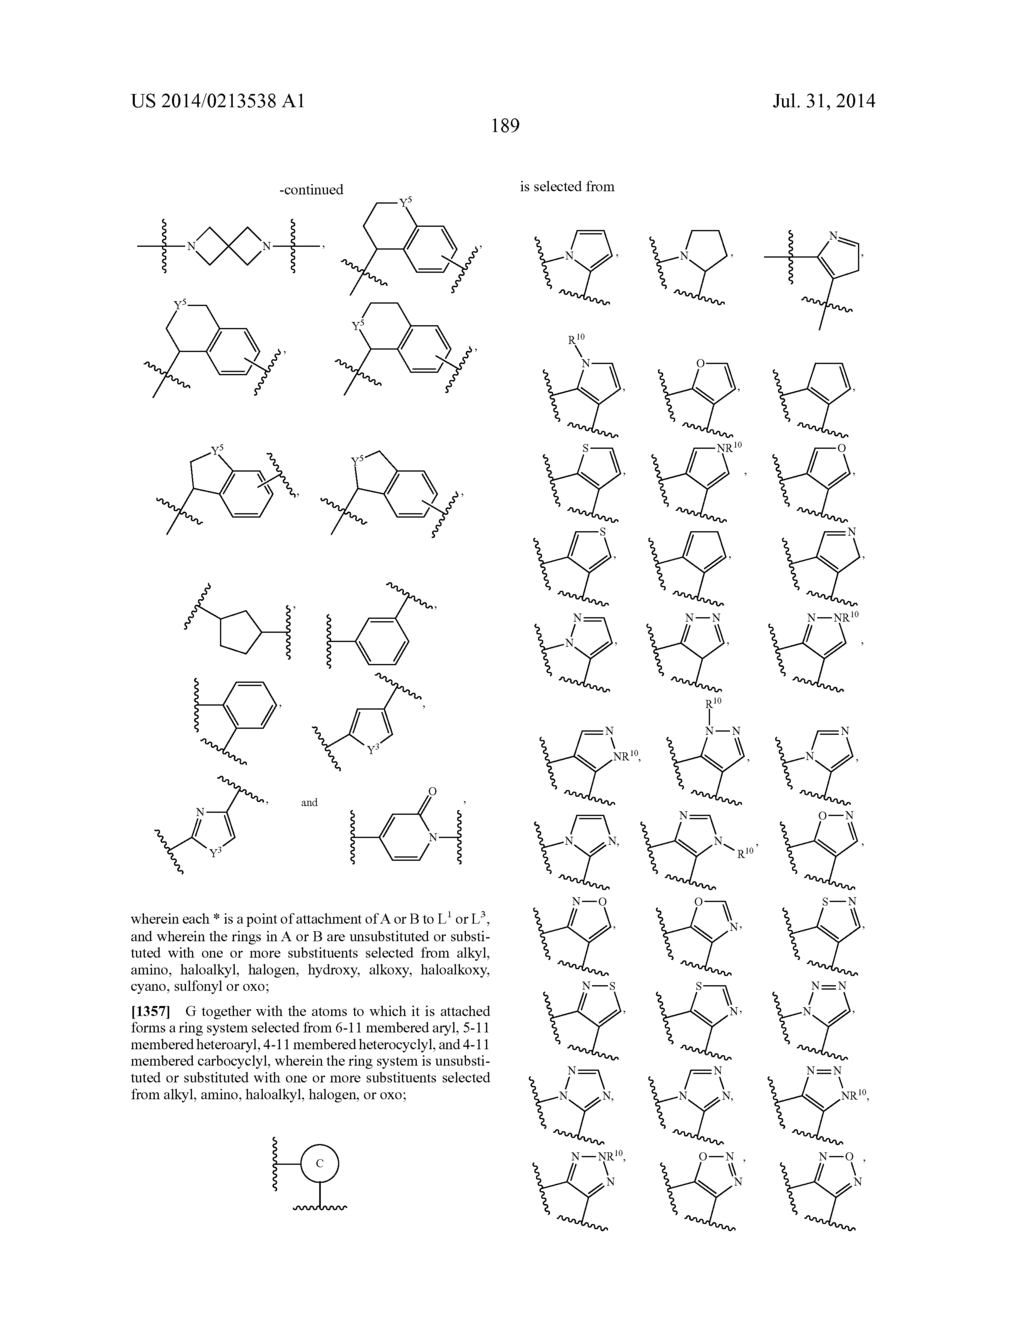 LYSOPHOSPHATIDIC ACID RECEPTOR ANTAGONISTS - diagram, schematic, and image 190